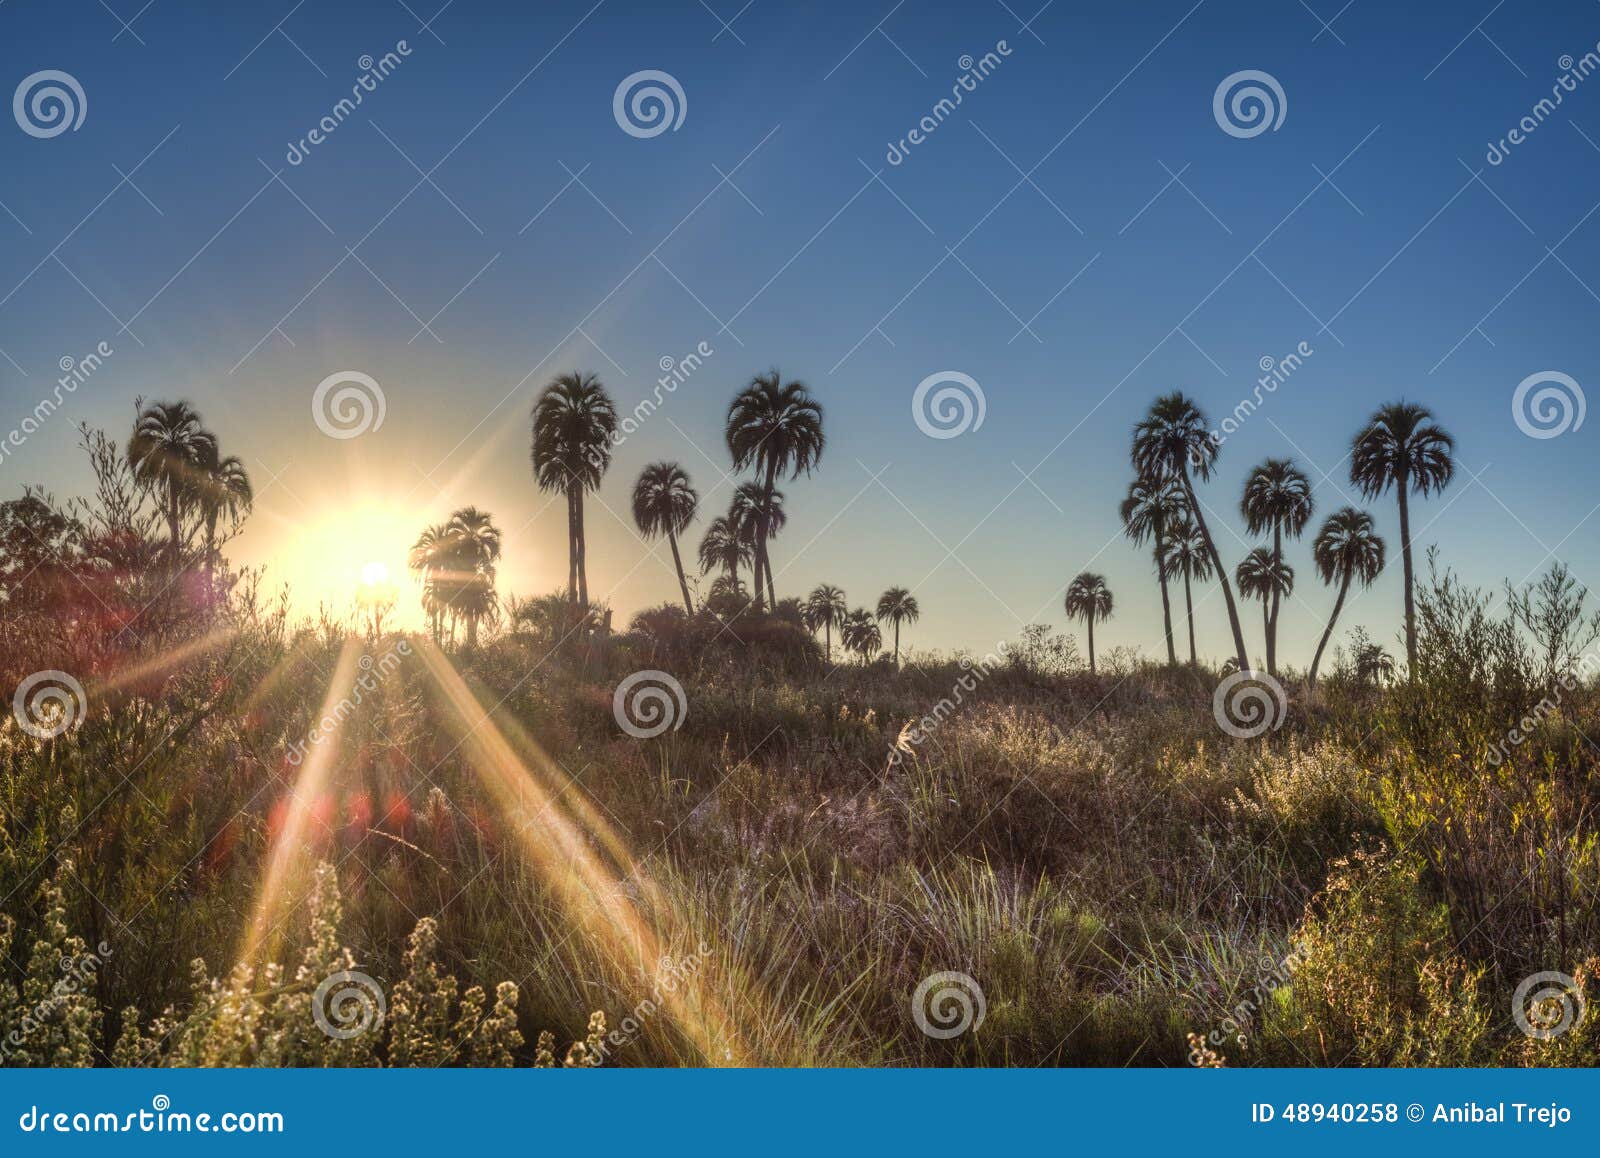 sunrise on el palmar national park, argentina